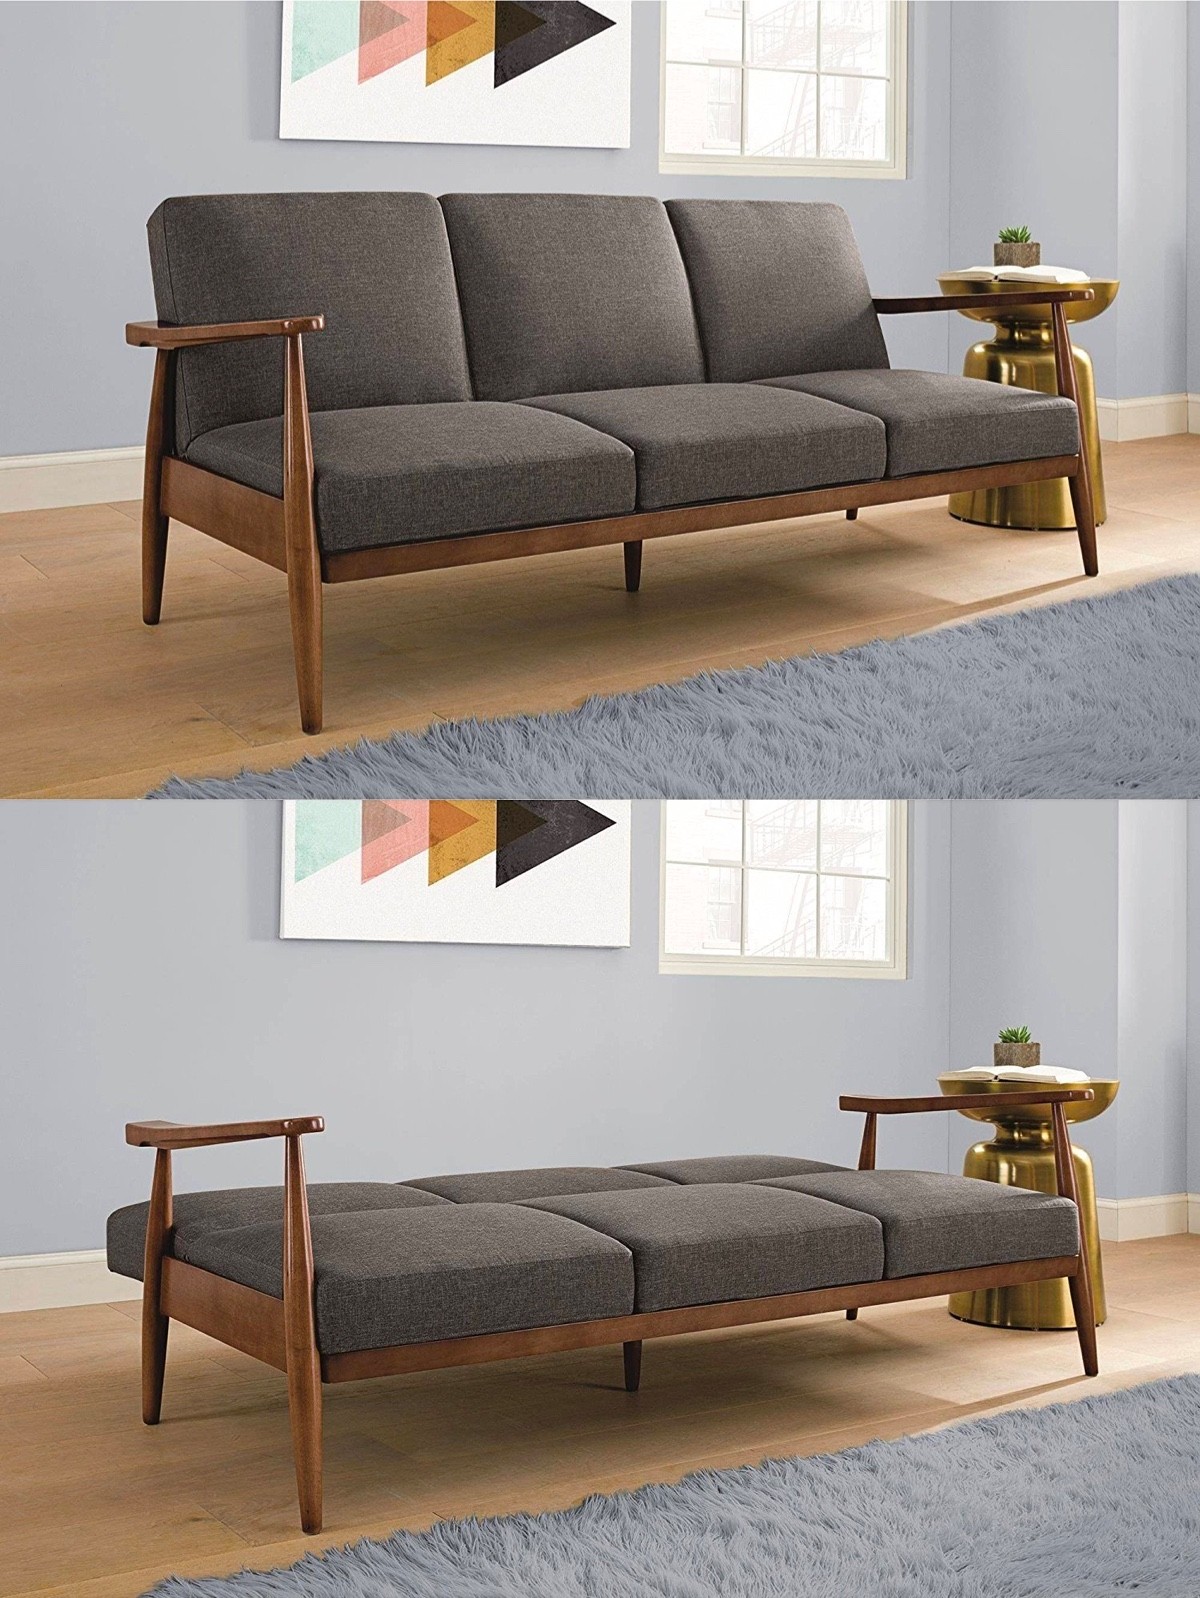 Mid Century Modern Sofa Bed Ideas On Foter